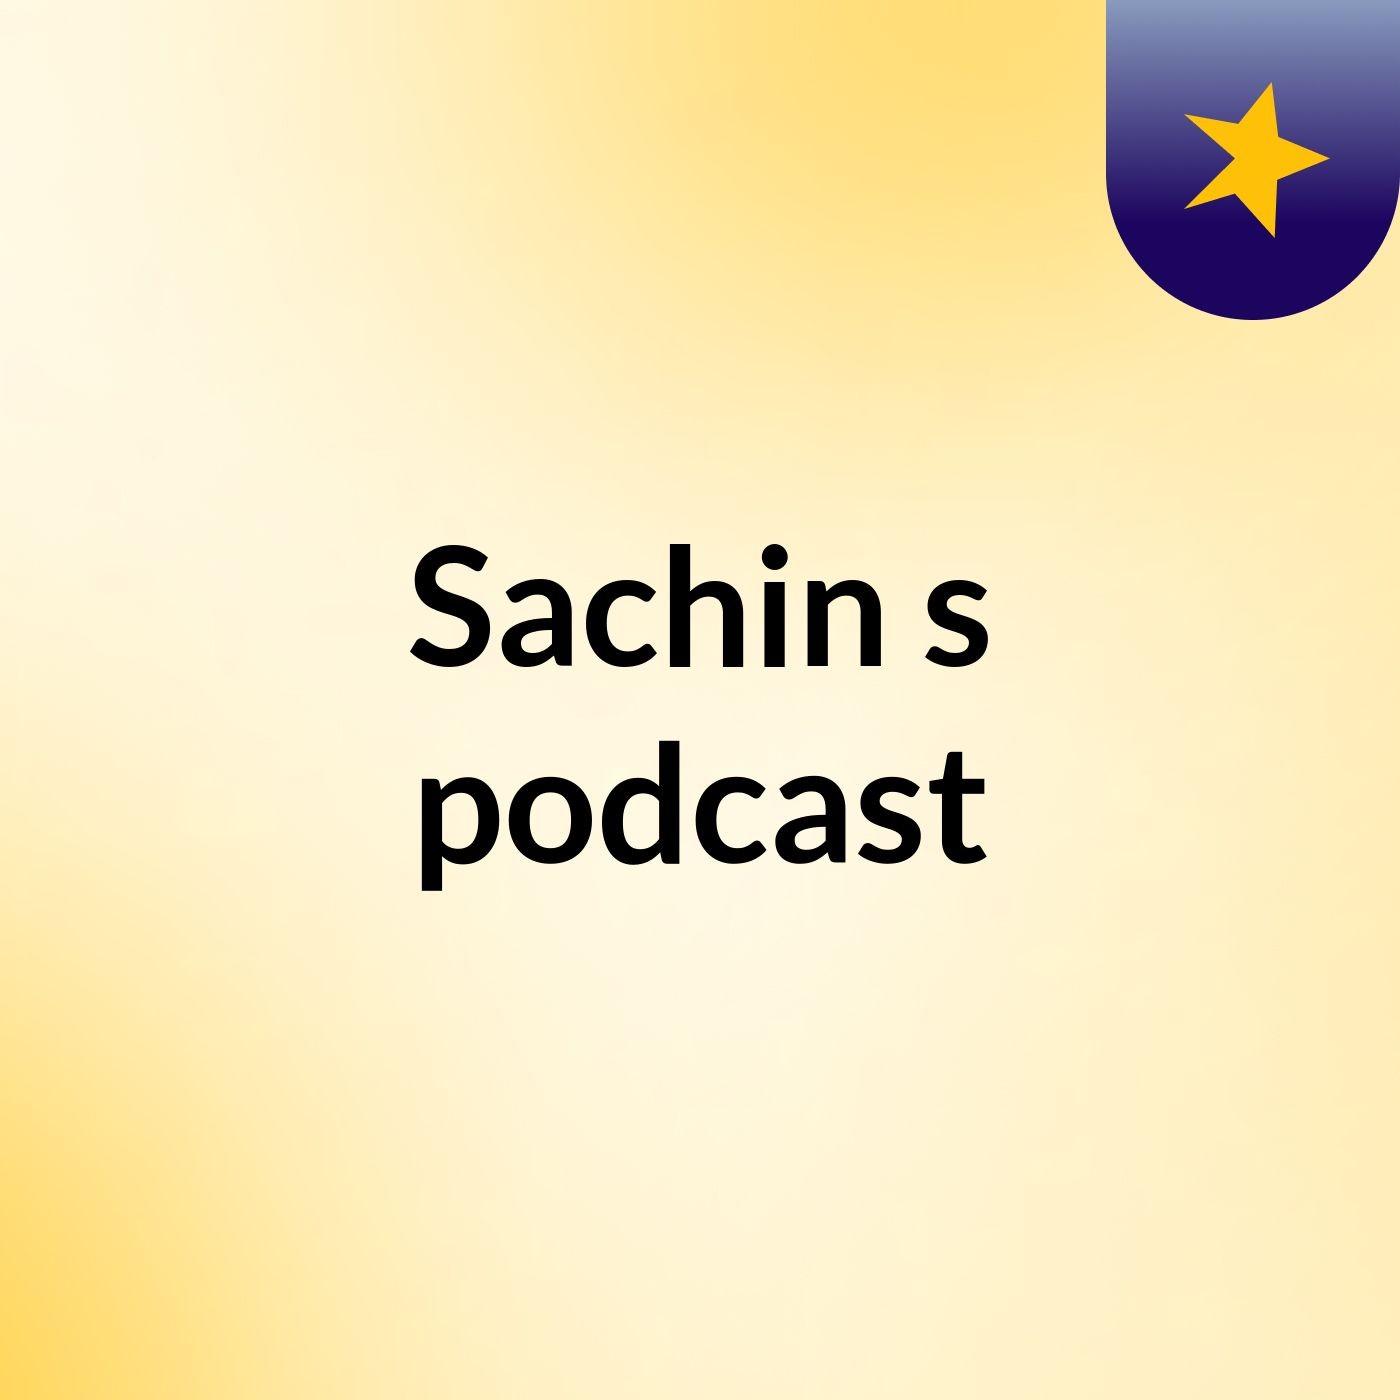 Sachin's podcast